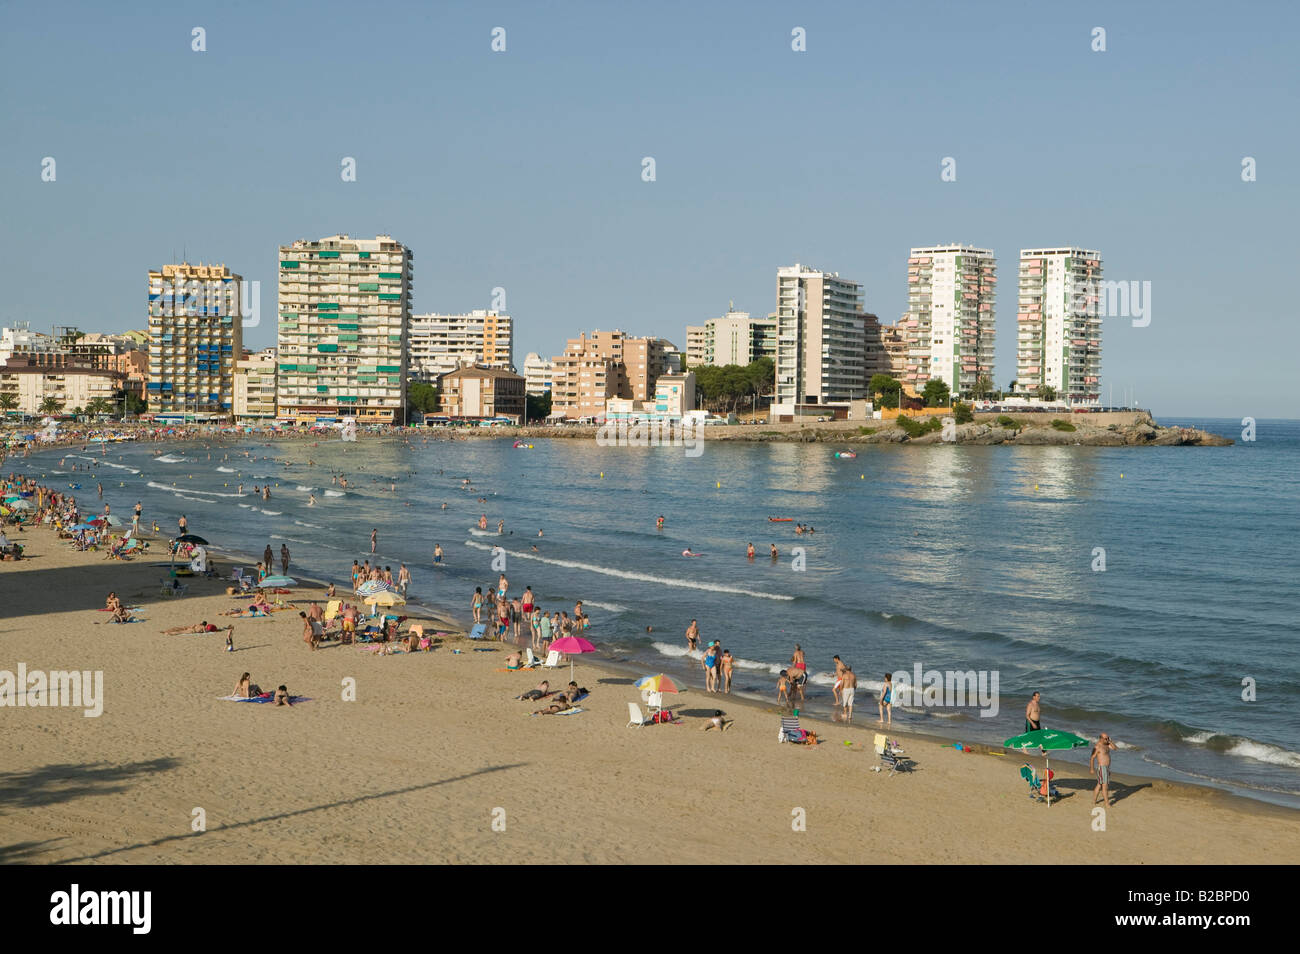 Oropesa, del, mar, Valencia, Spain, beach, holidays, vacation, urbanist, summer, town-planning, building, travel, destination Stock Photo